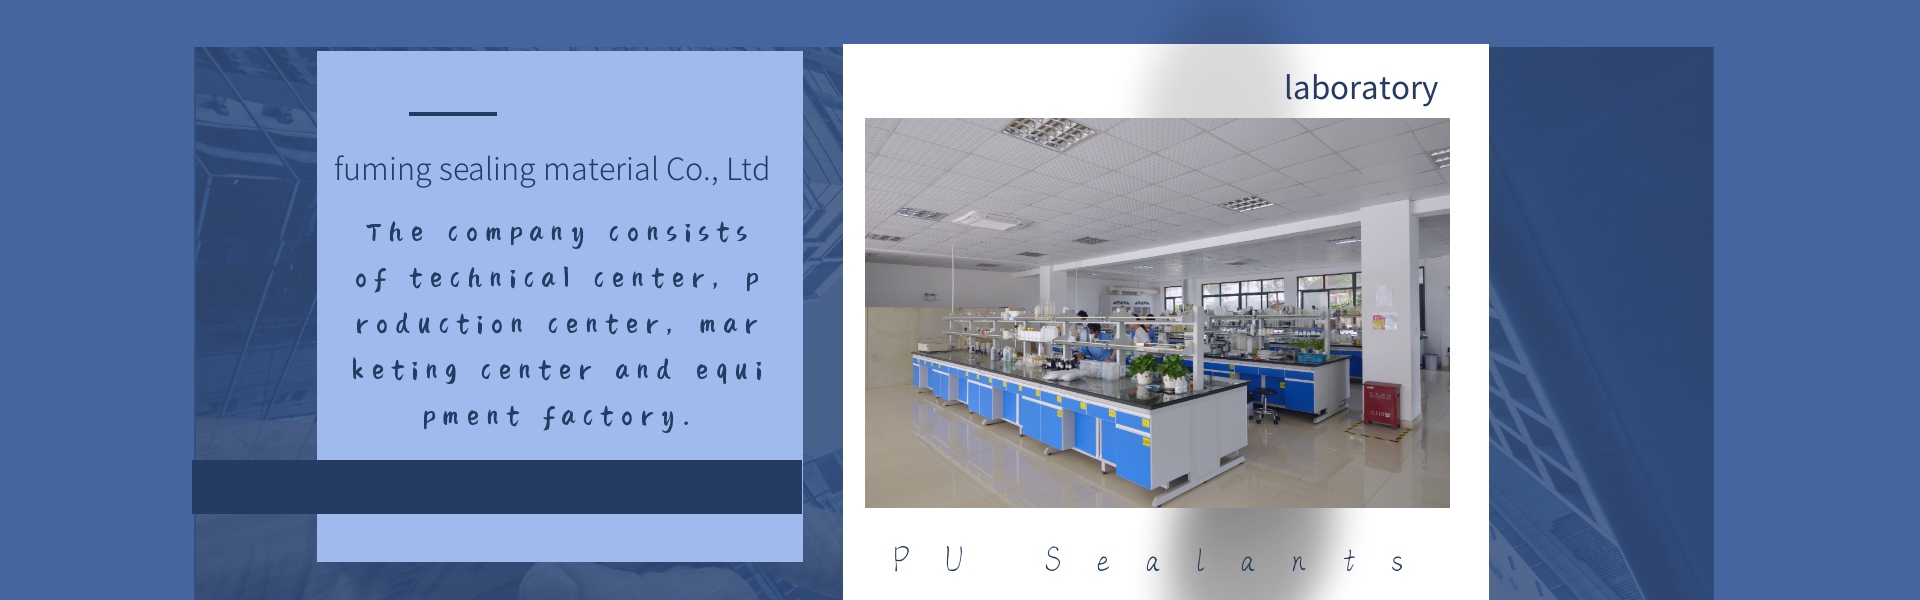 adhésif de mise en pot électronique, scellants pu, scellant de filtre,Dongguan fuming sealing material Co., Ltd